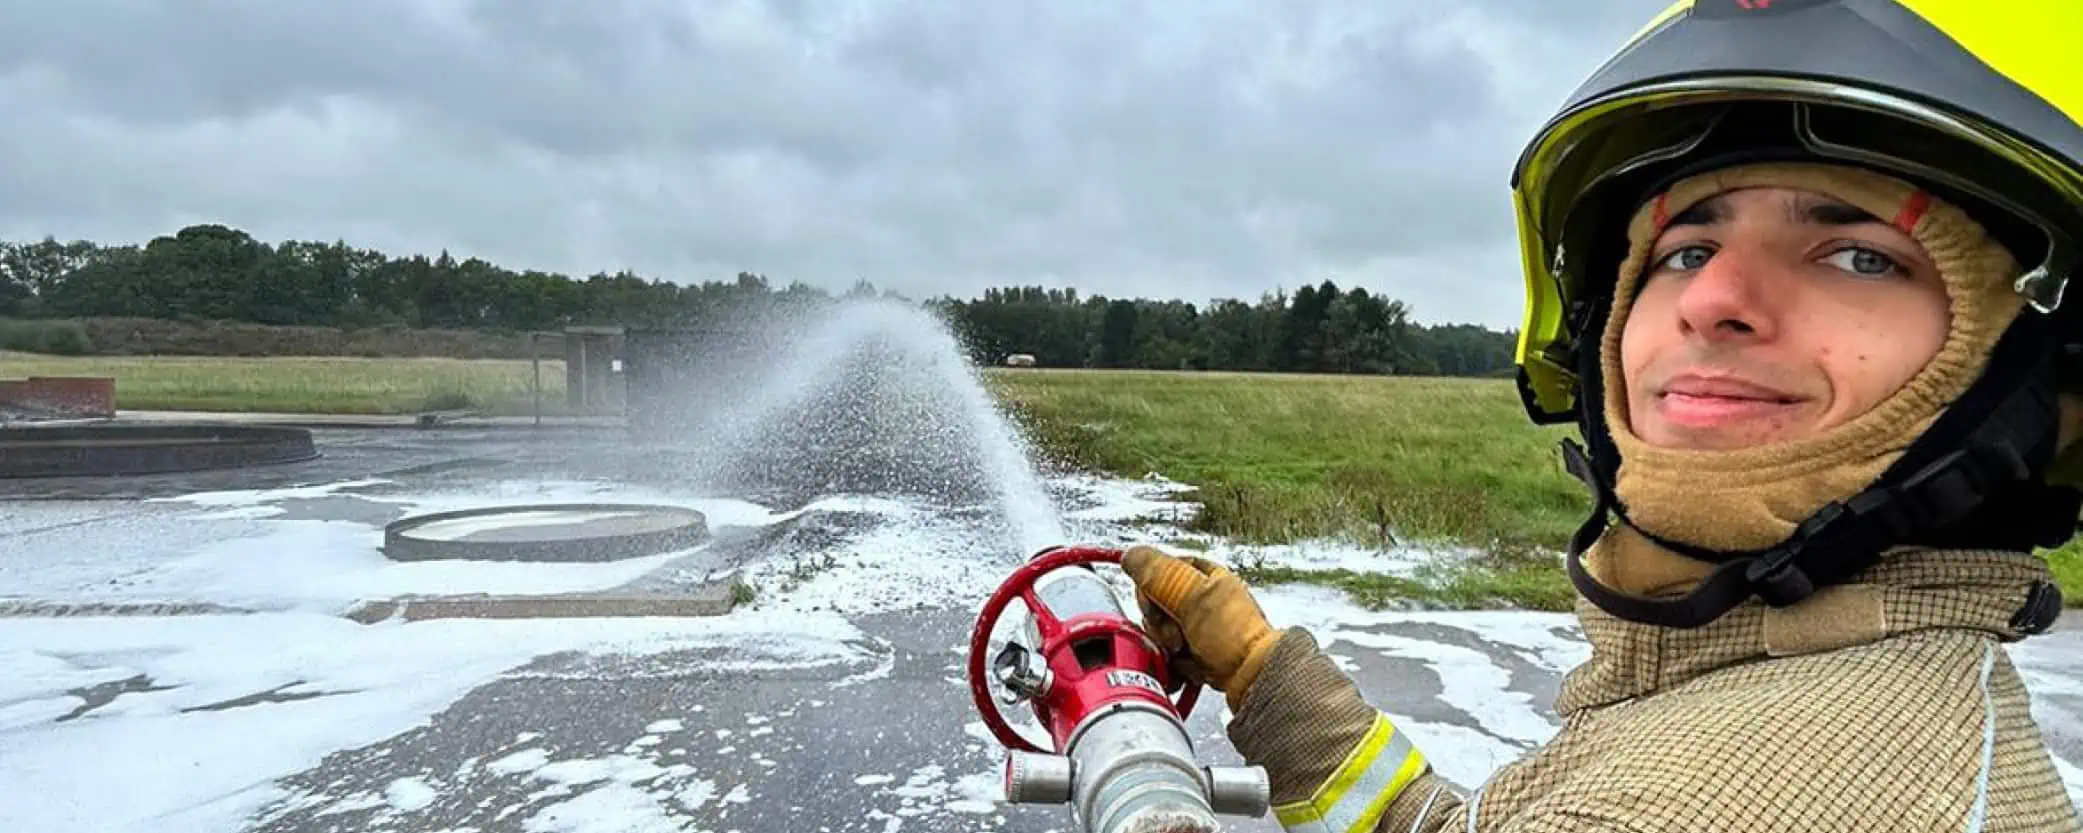 Firefighter spraying water through a hose reel